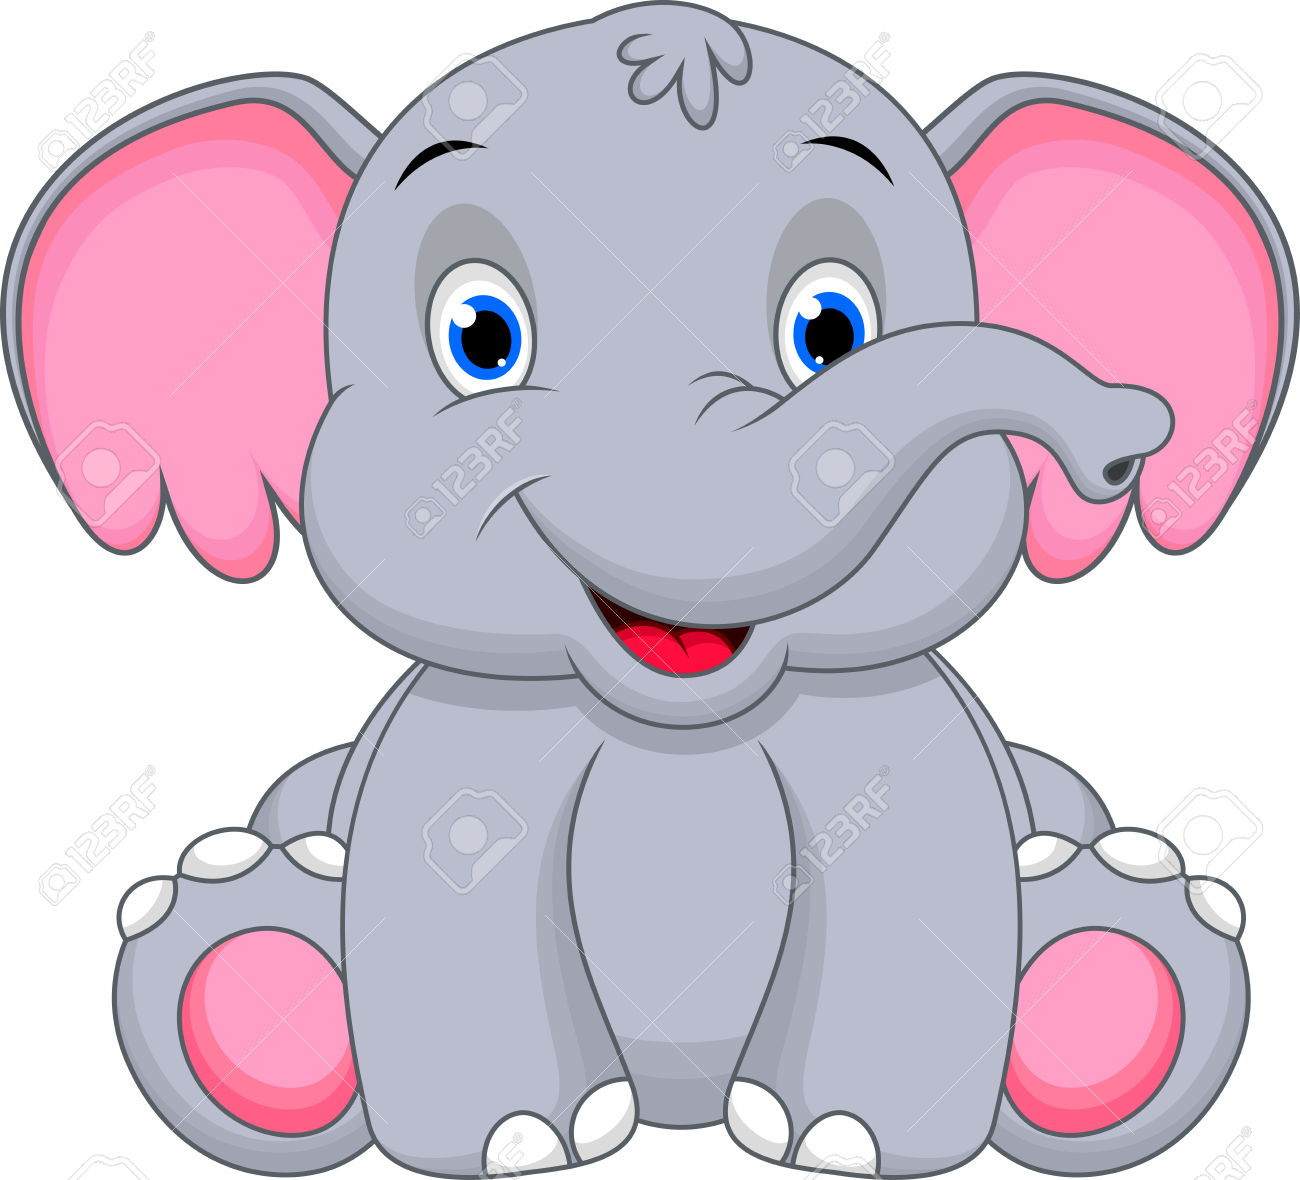 cute elephant: Cute baby elephant cartoon